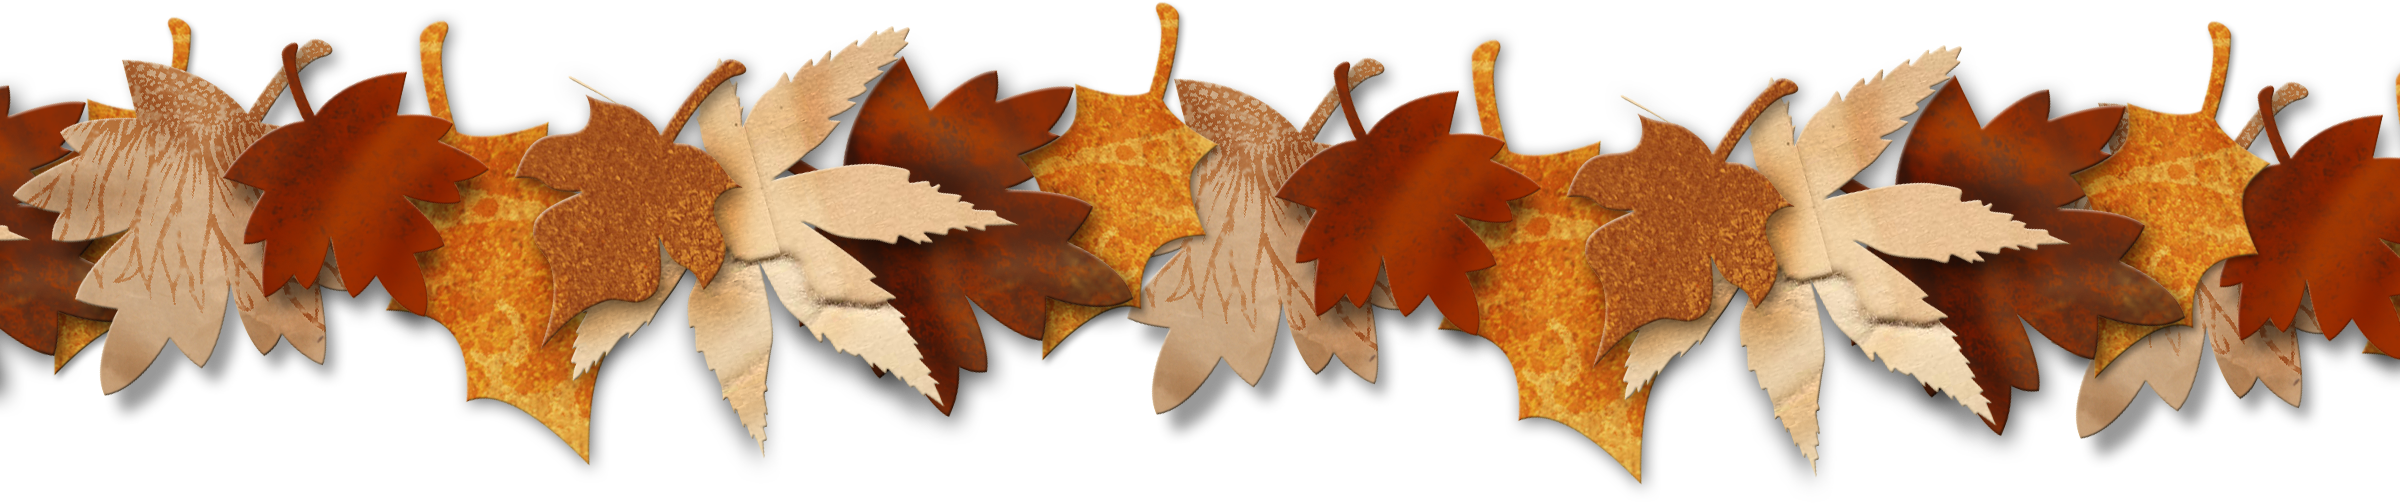 Garland clipart autumn. Leaf border clip art